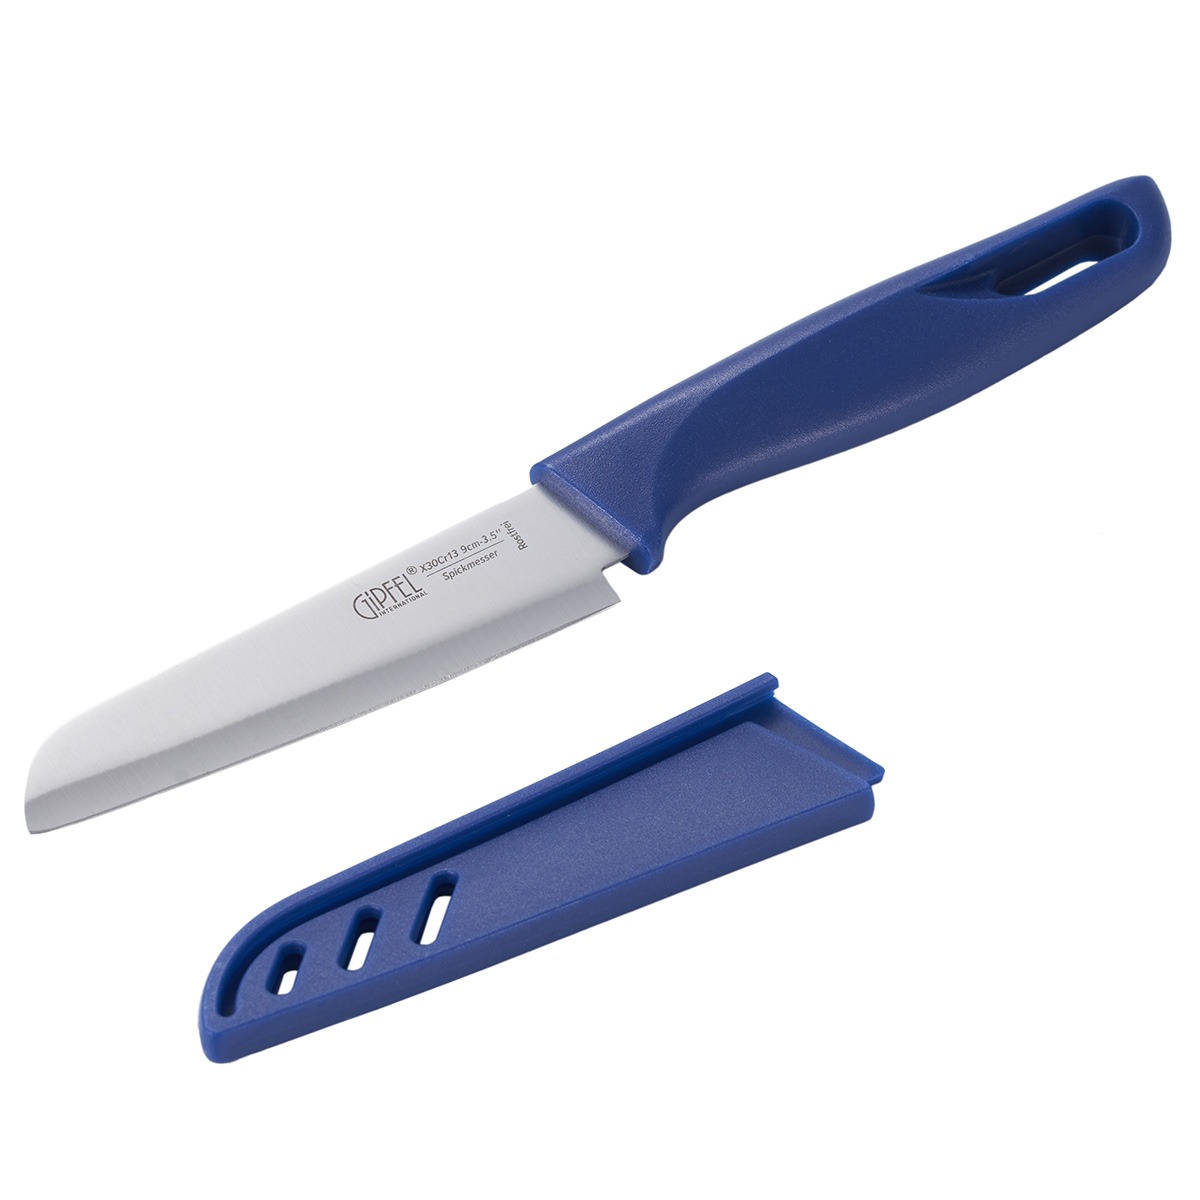 Нож для чистки овощей Gipfel Sorti стальной синий 9 см нож для овощей gipfel laminili 9 см